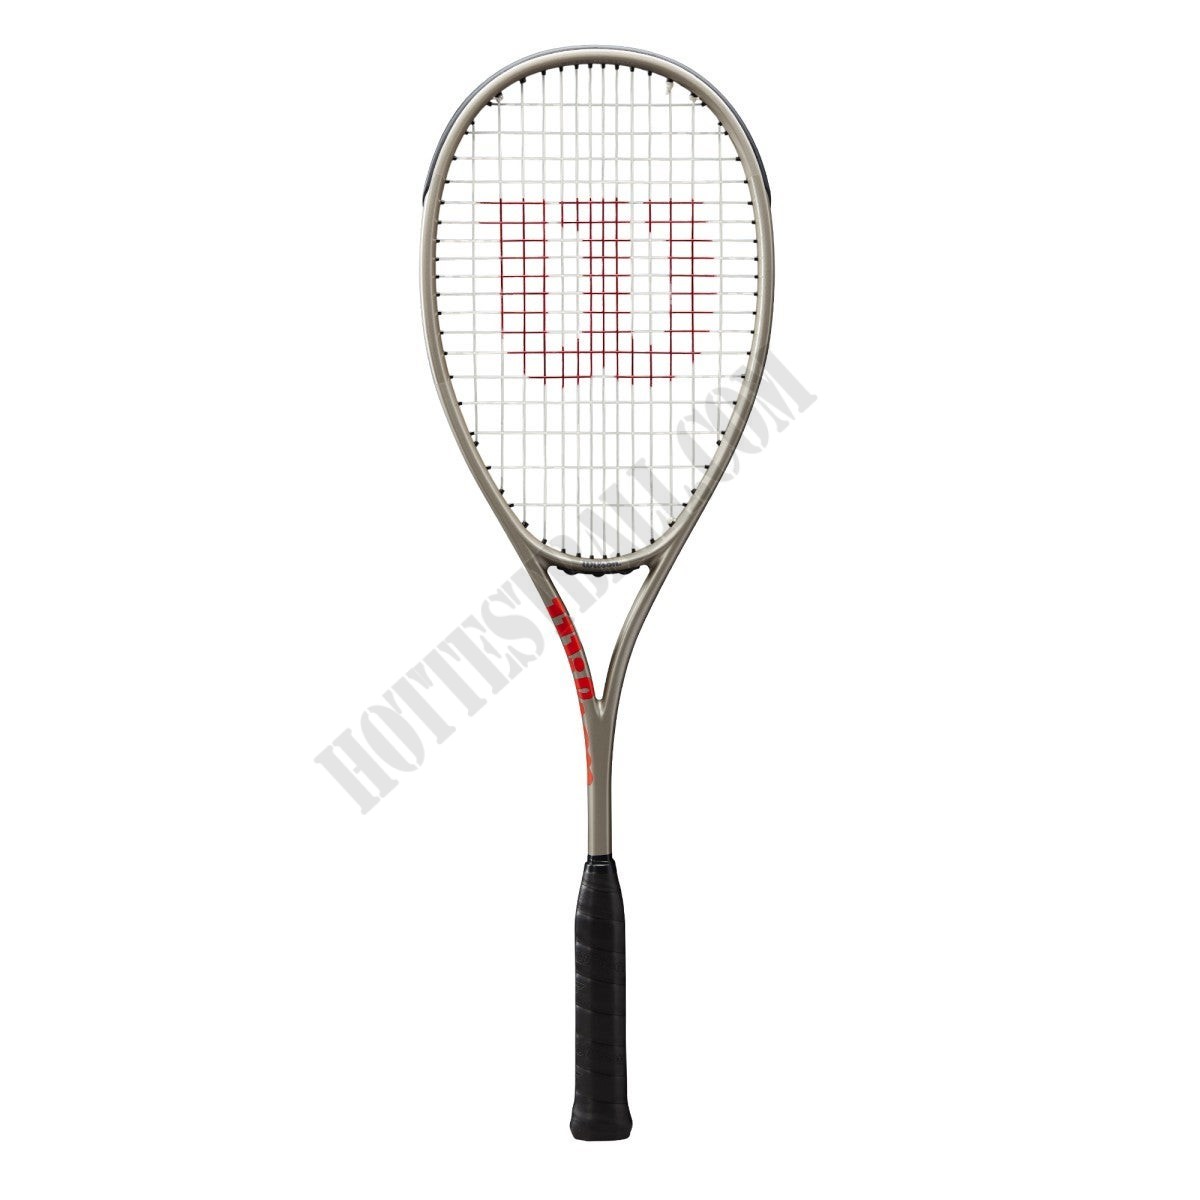 Pro Staff Light Squash Racquet - Wilson Discount Store - Pro Staff Light Squash Racquet - Wilson Discount Store